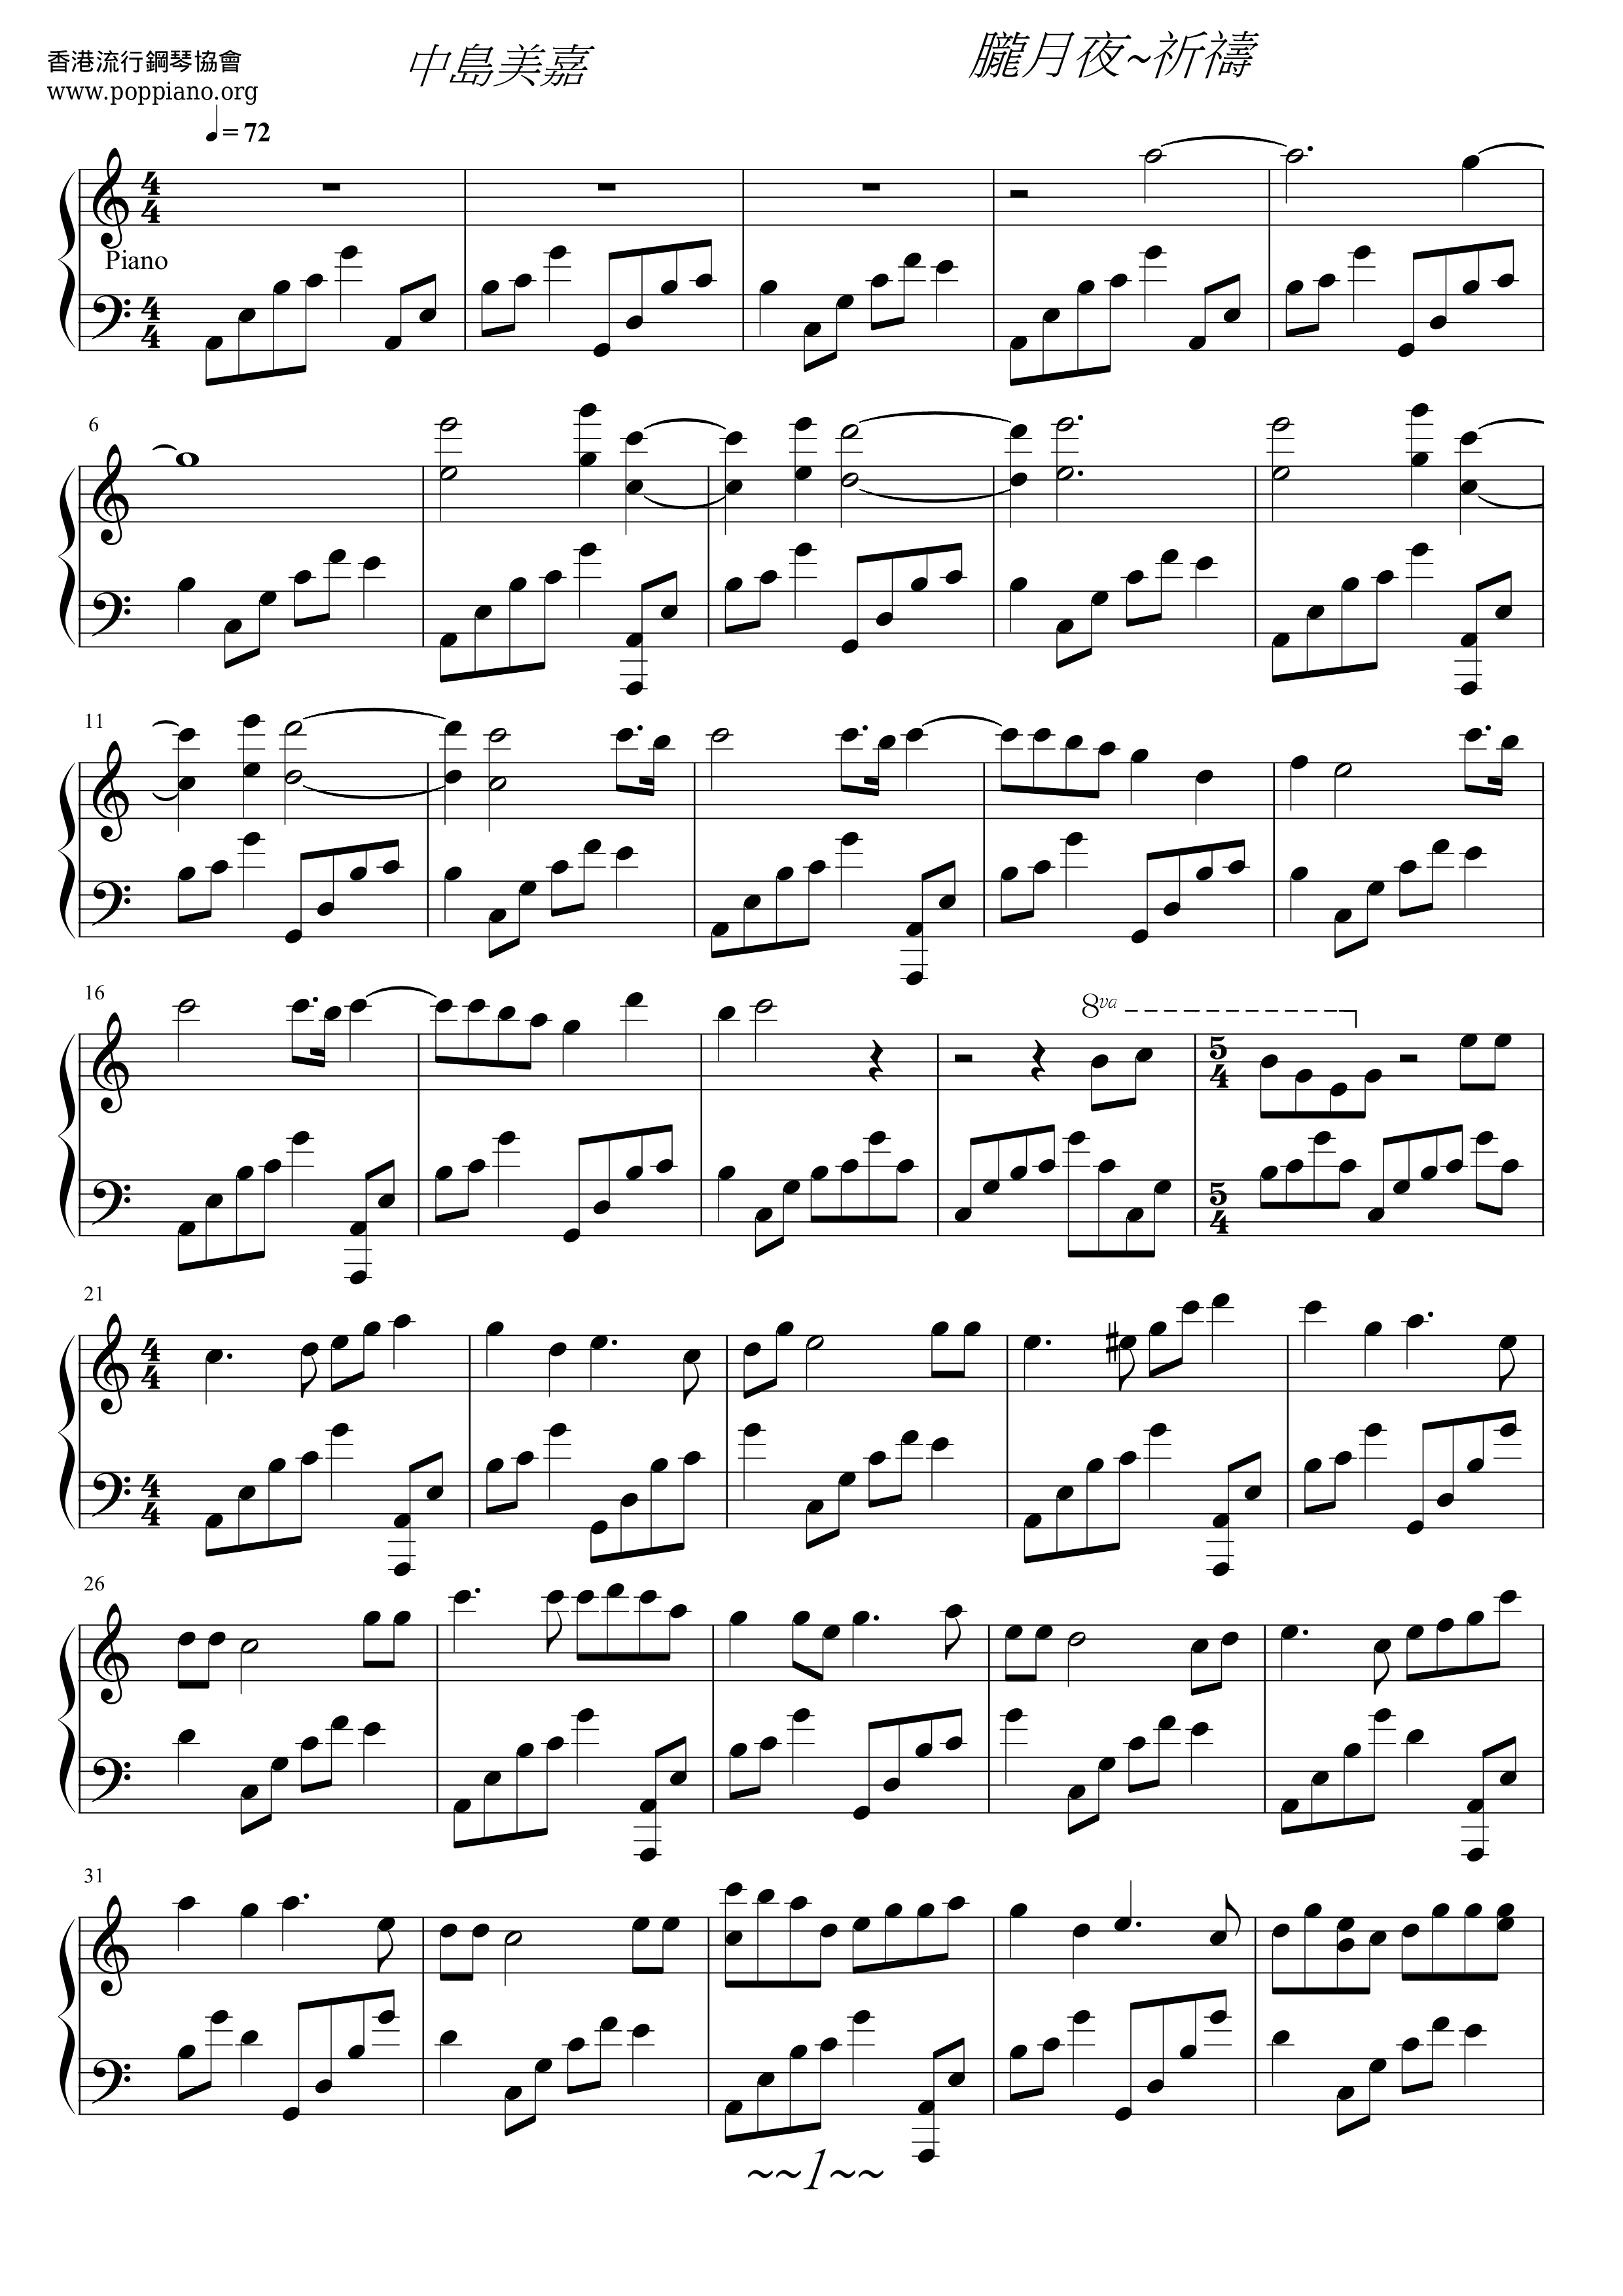 Moonlight Night Score